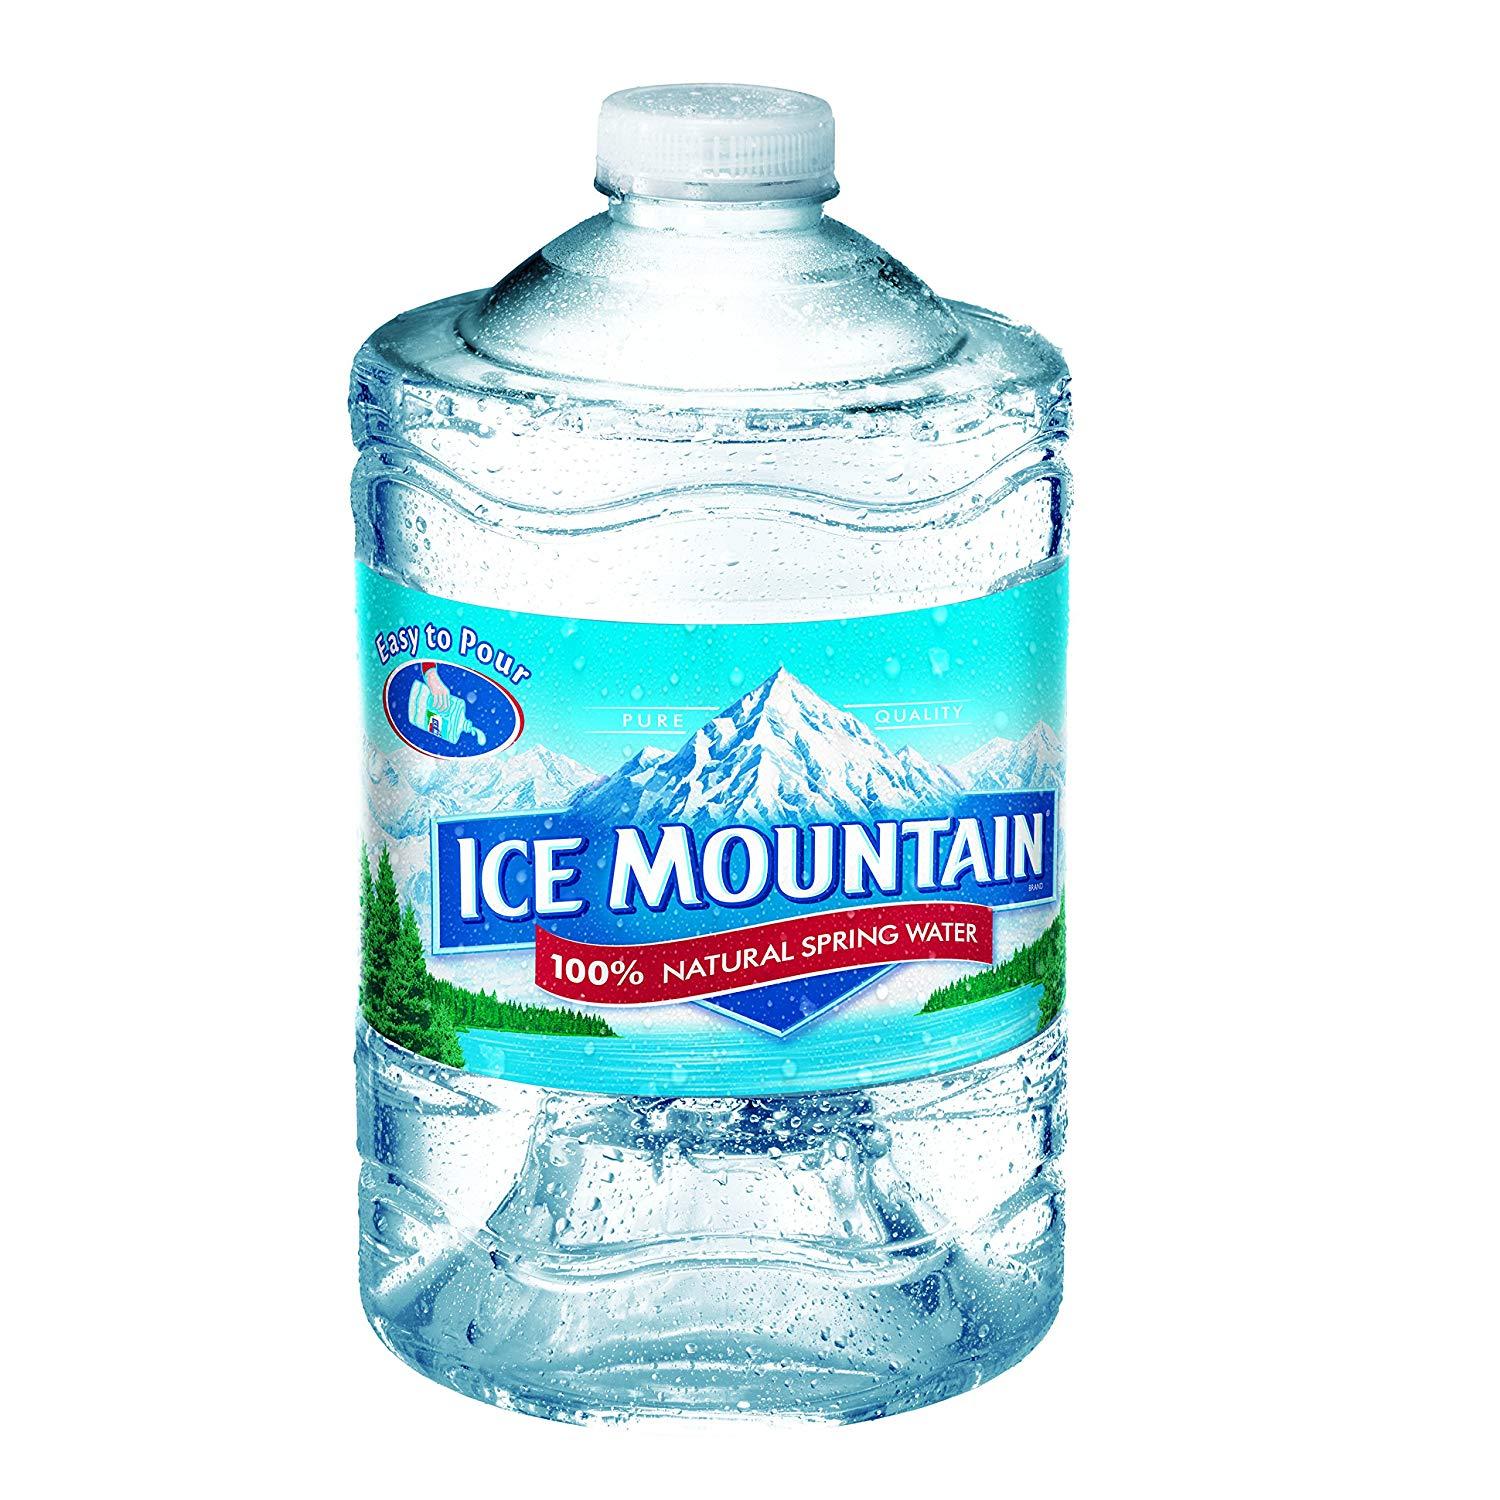 Water Bottle Ice Mountain Logo - Amazon.com : Ice Mountain 100% Natural Spring Water, 8-ounce mini ...